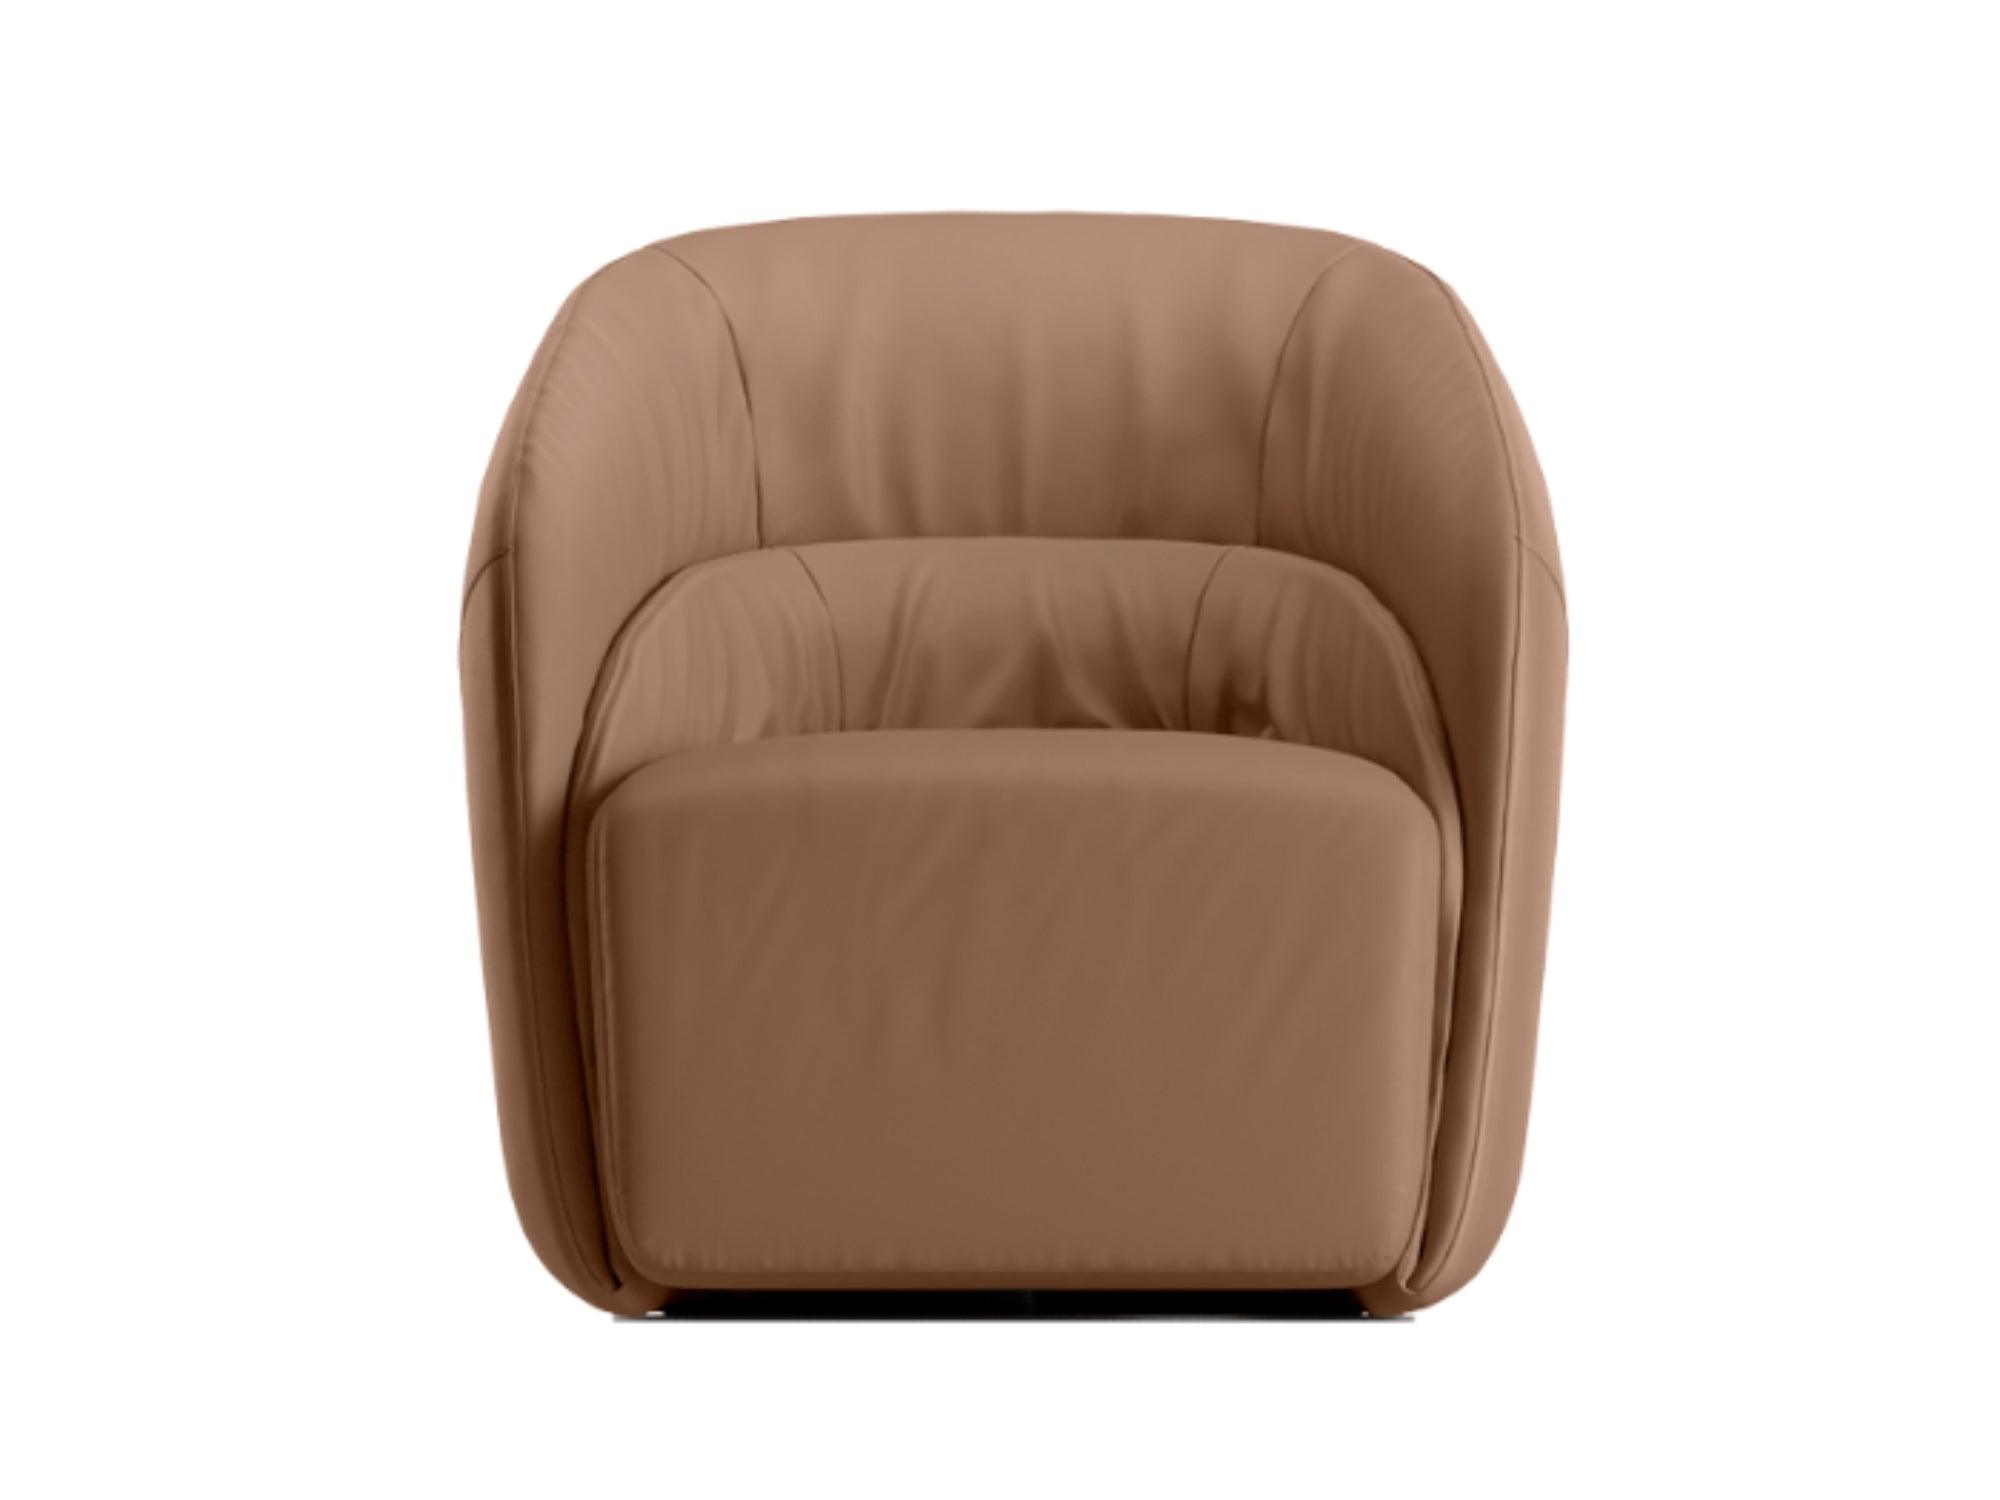 Botao Fabric Armchair By Natuzzi - Euro Living Furniture